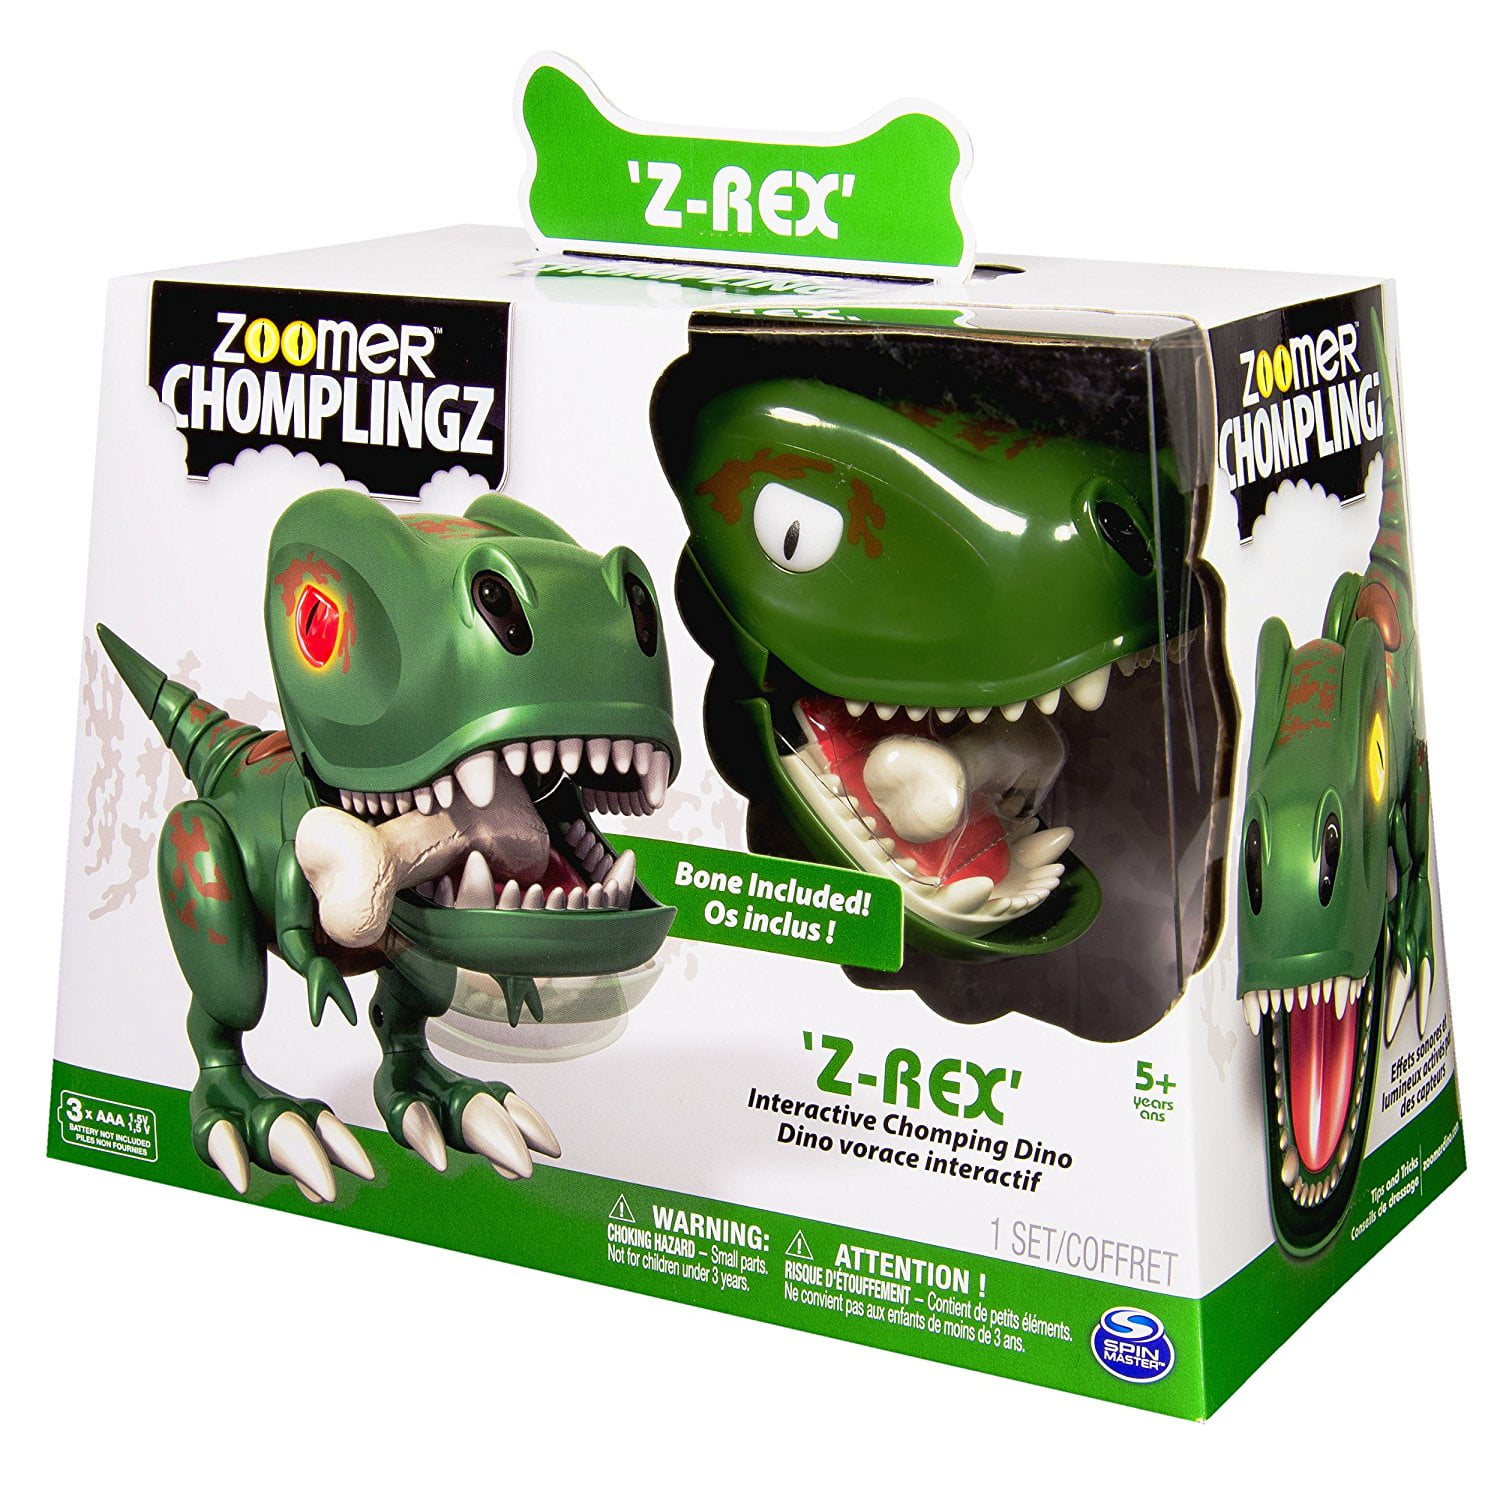 NEW Details about   Zoomer Chomplingz ‘Z-Rex’  Interactive Chomping Bone Dinosaur